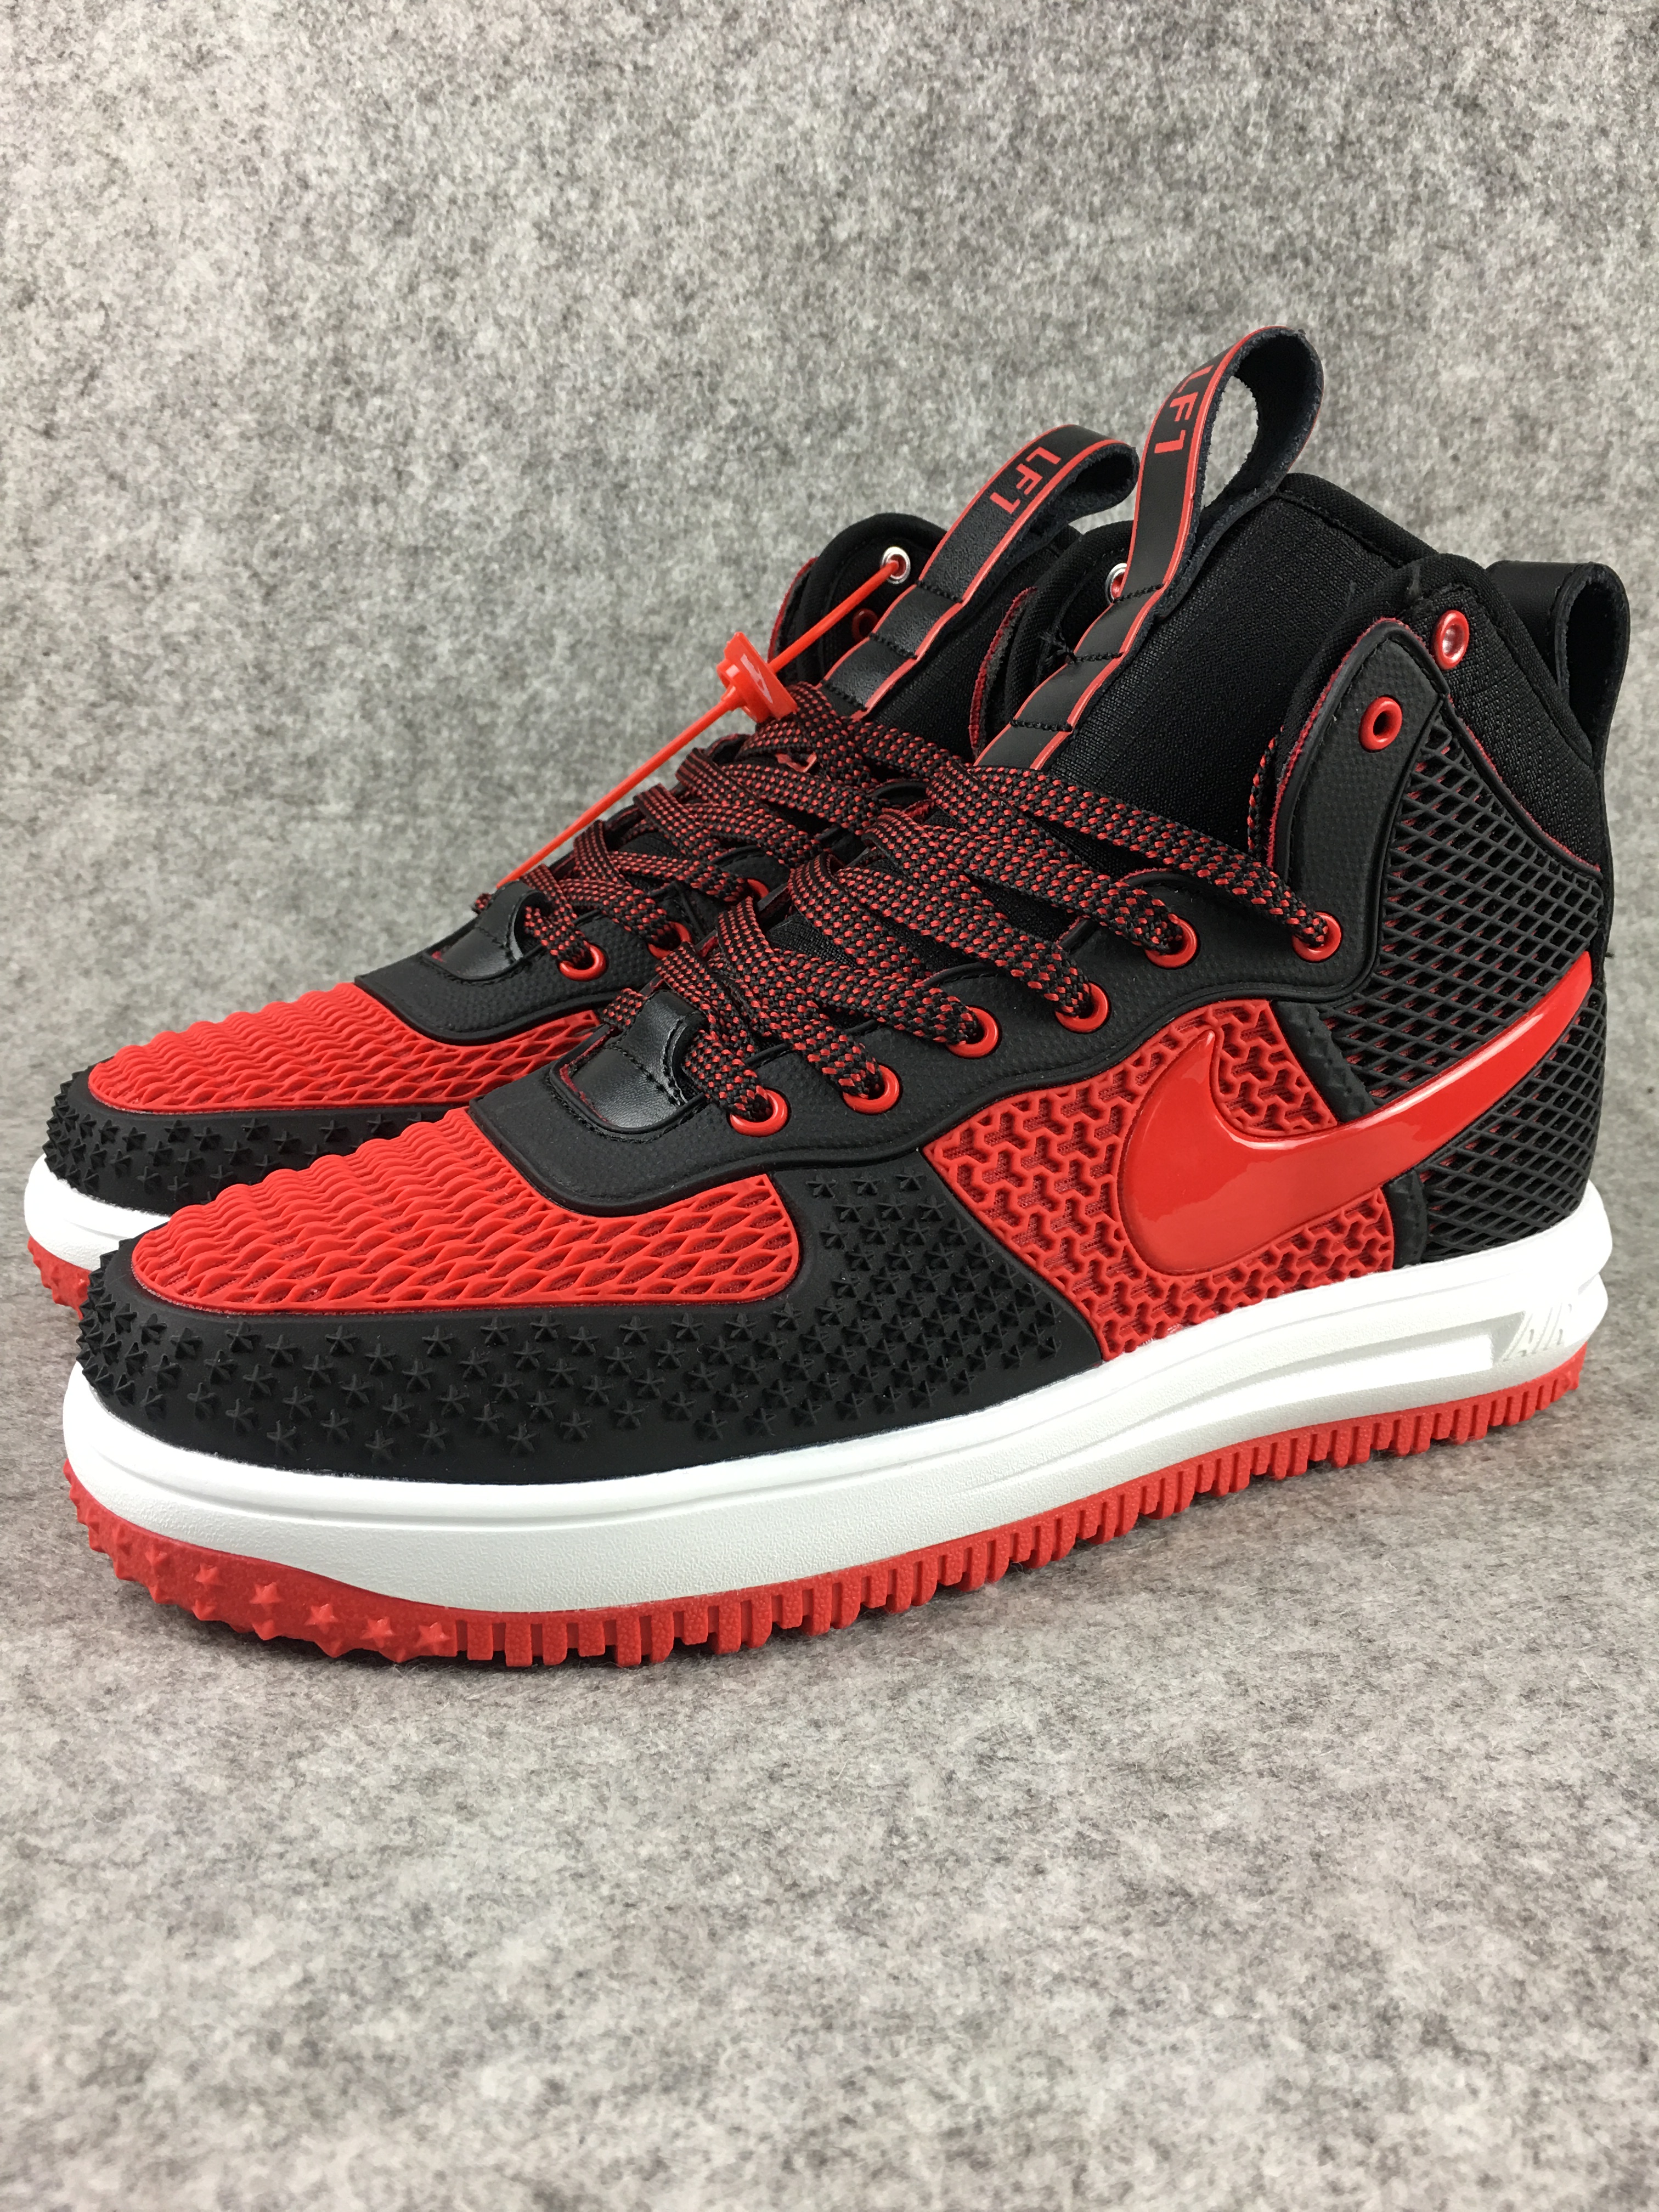 Nike Lunar Force 1 Nano Black Red Shoes